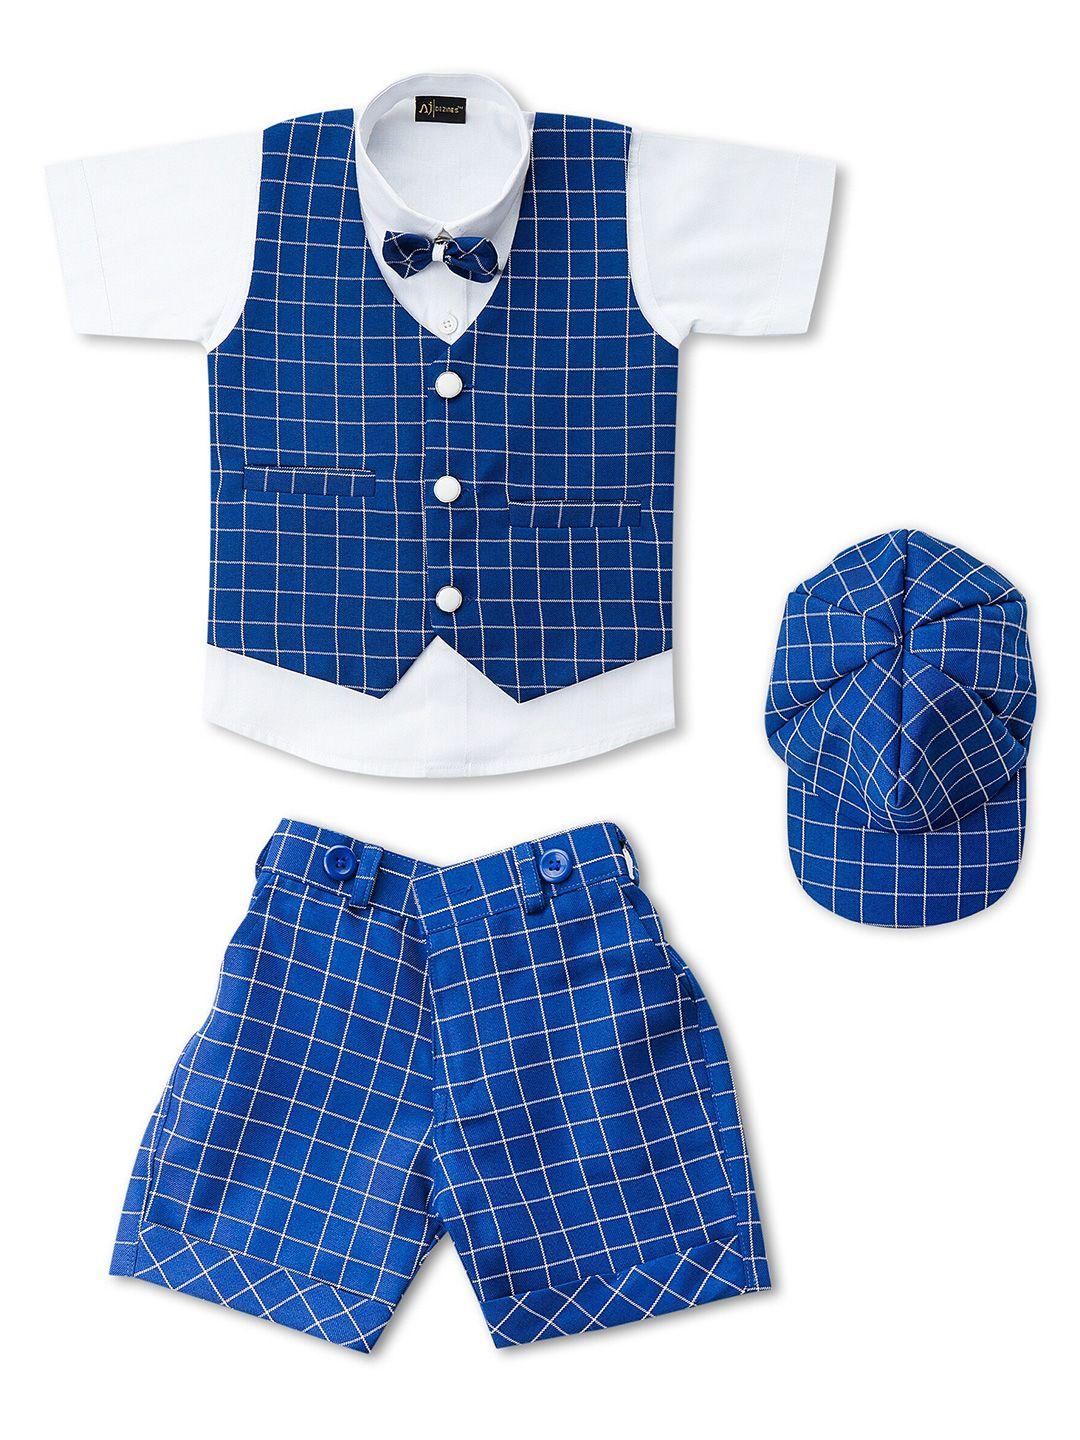 aj dezines boys blue & white checked clothing set